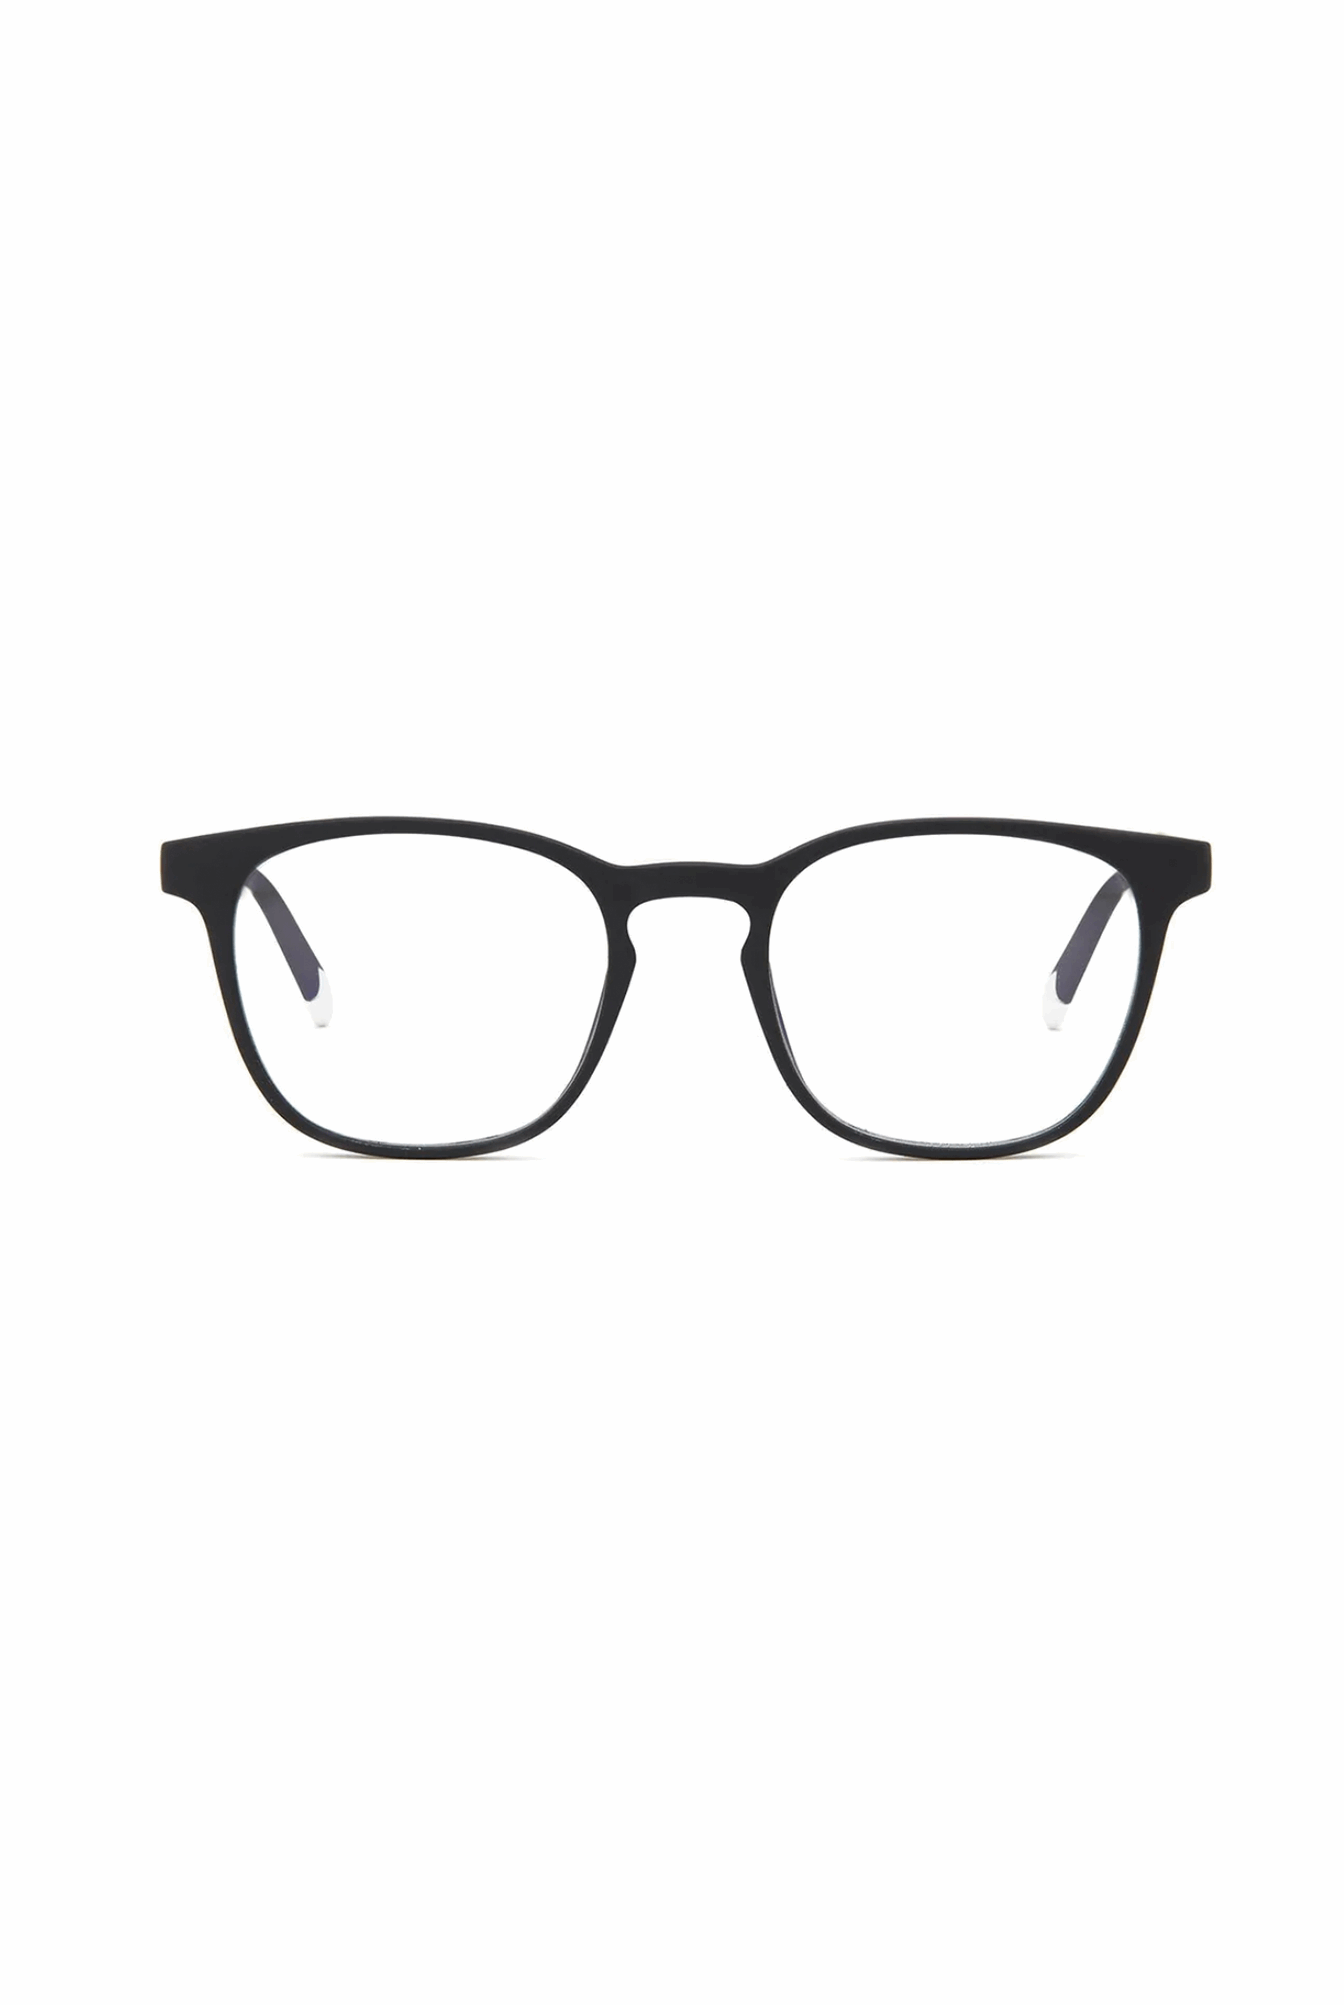 Barner - DALSTON - Reading Glasses